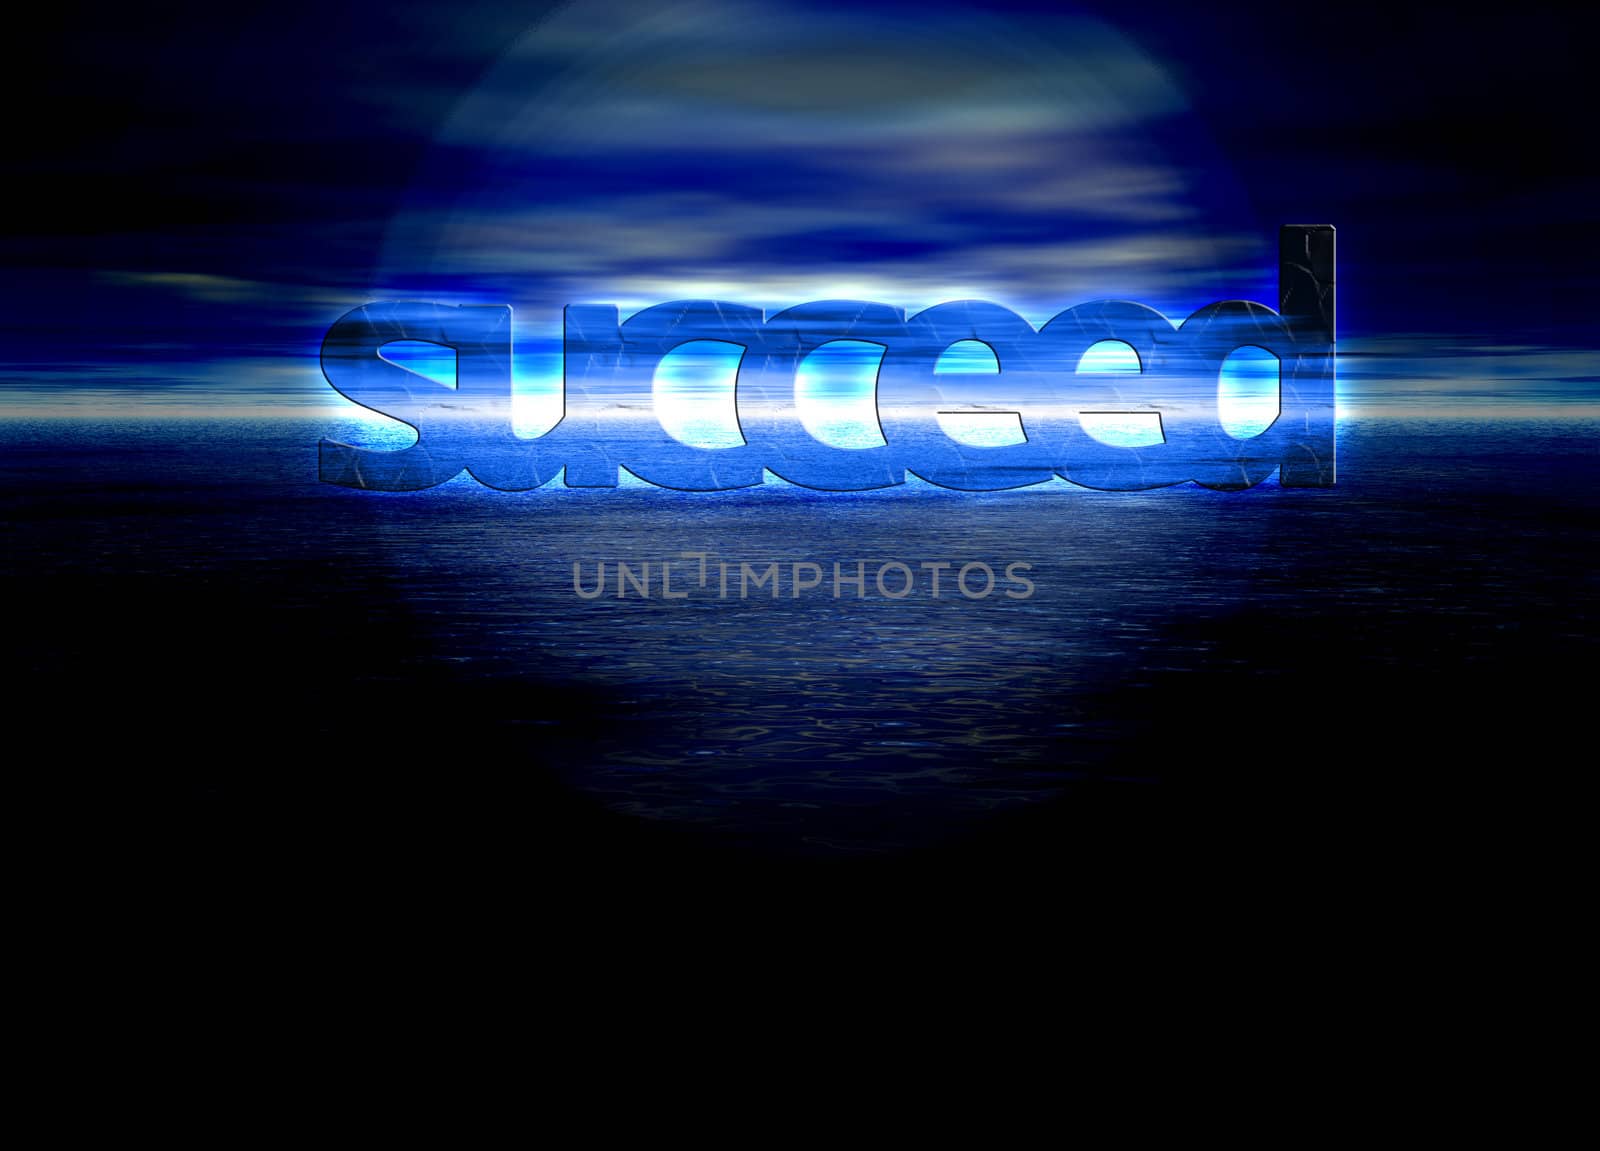 Succeed Text on Stunning Blue Bright Ocean Sea Horizon at Night